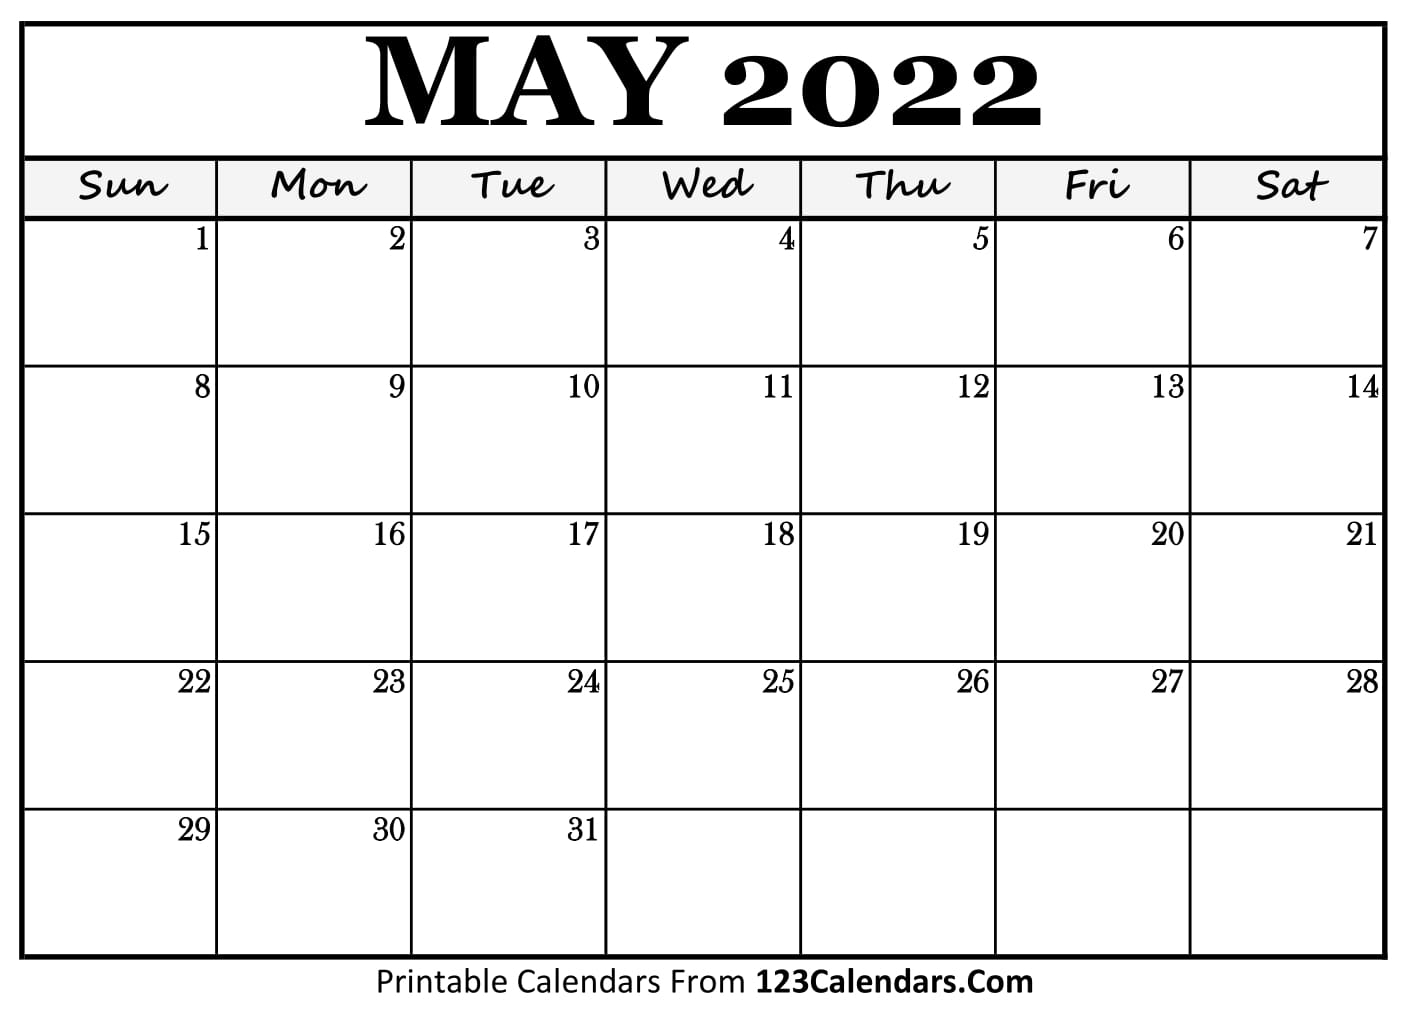 May 2022 Printable Calendar Printable May 2022 Calendar Templates - 123Calendars.com